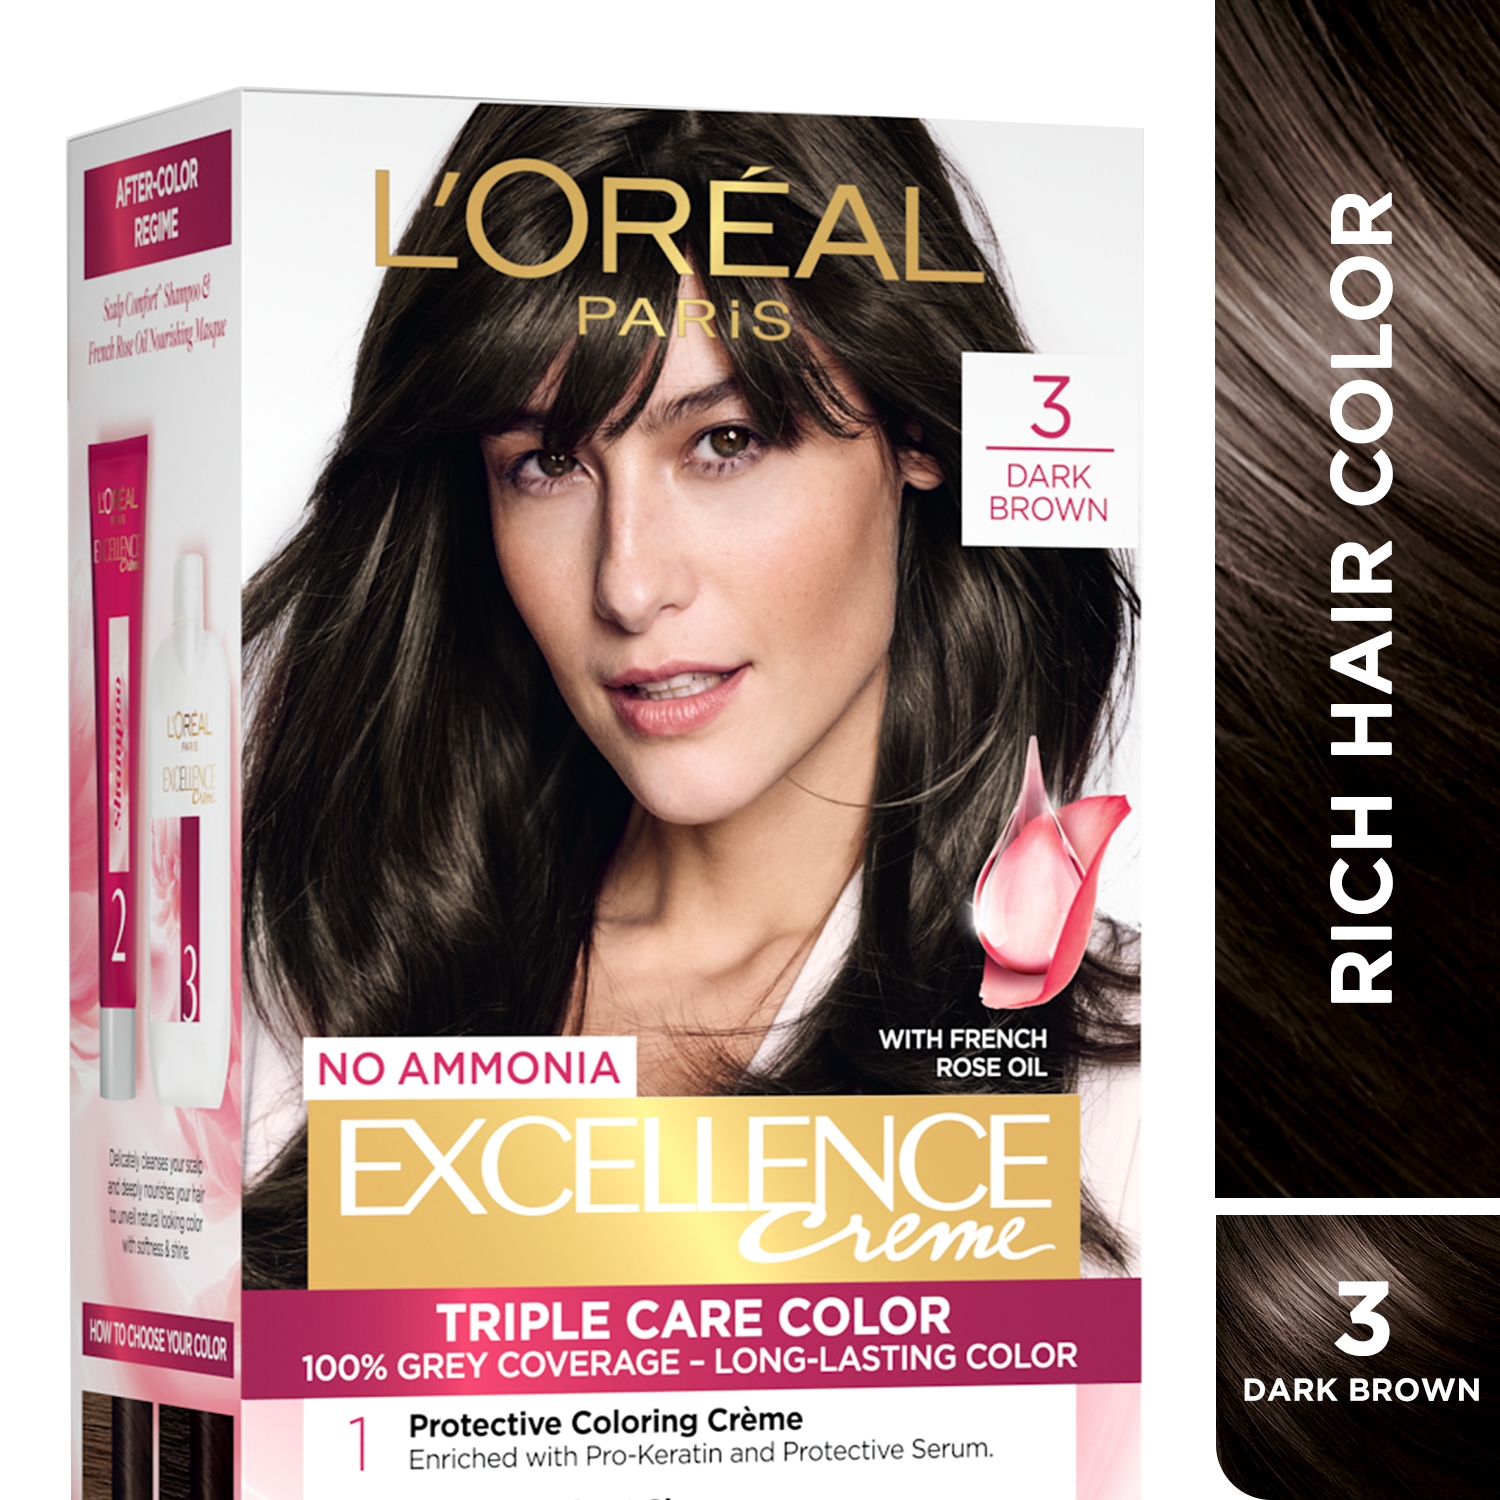 L'Oreal Paris | L'Oreal Paris Excellence Creme Hair Color, 3 Dark Brown/Natural Darkest Brown, 72ml+100g